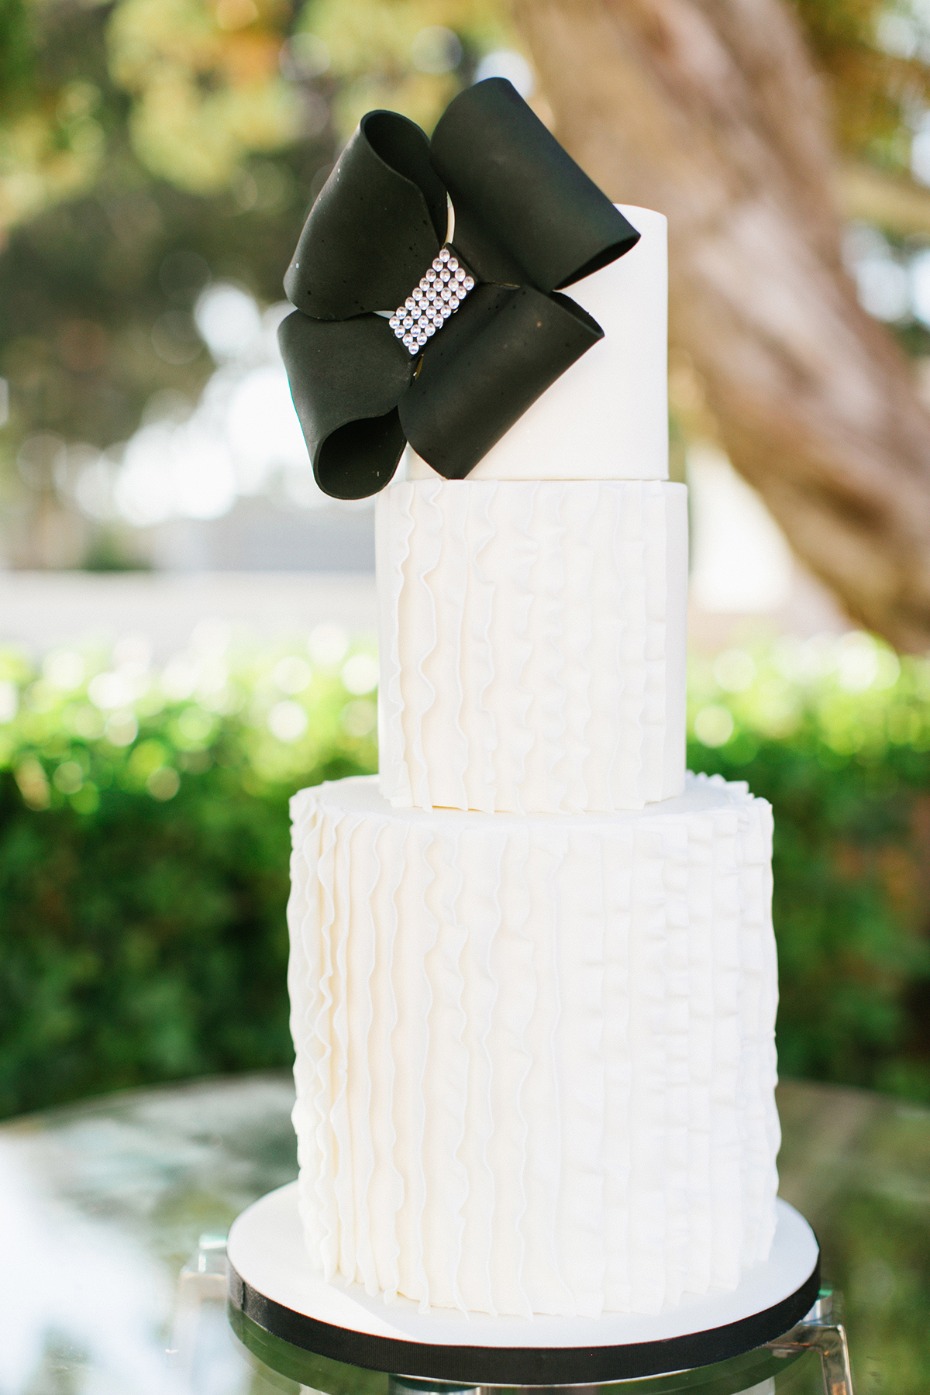 Modern white ruffle cake with black bow